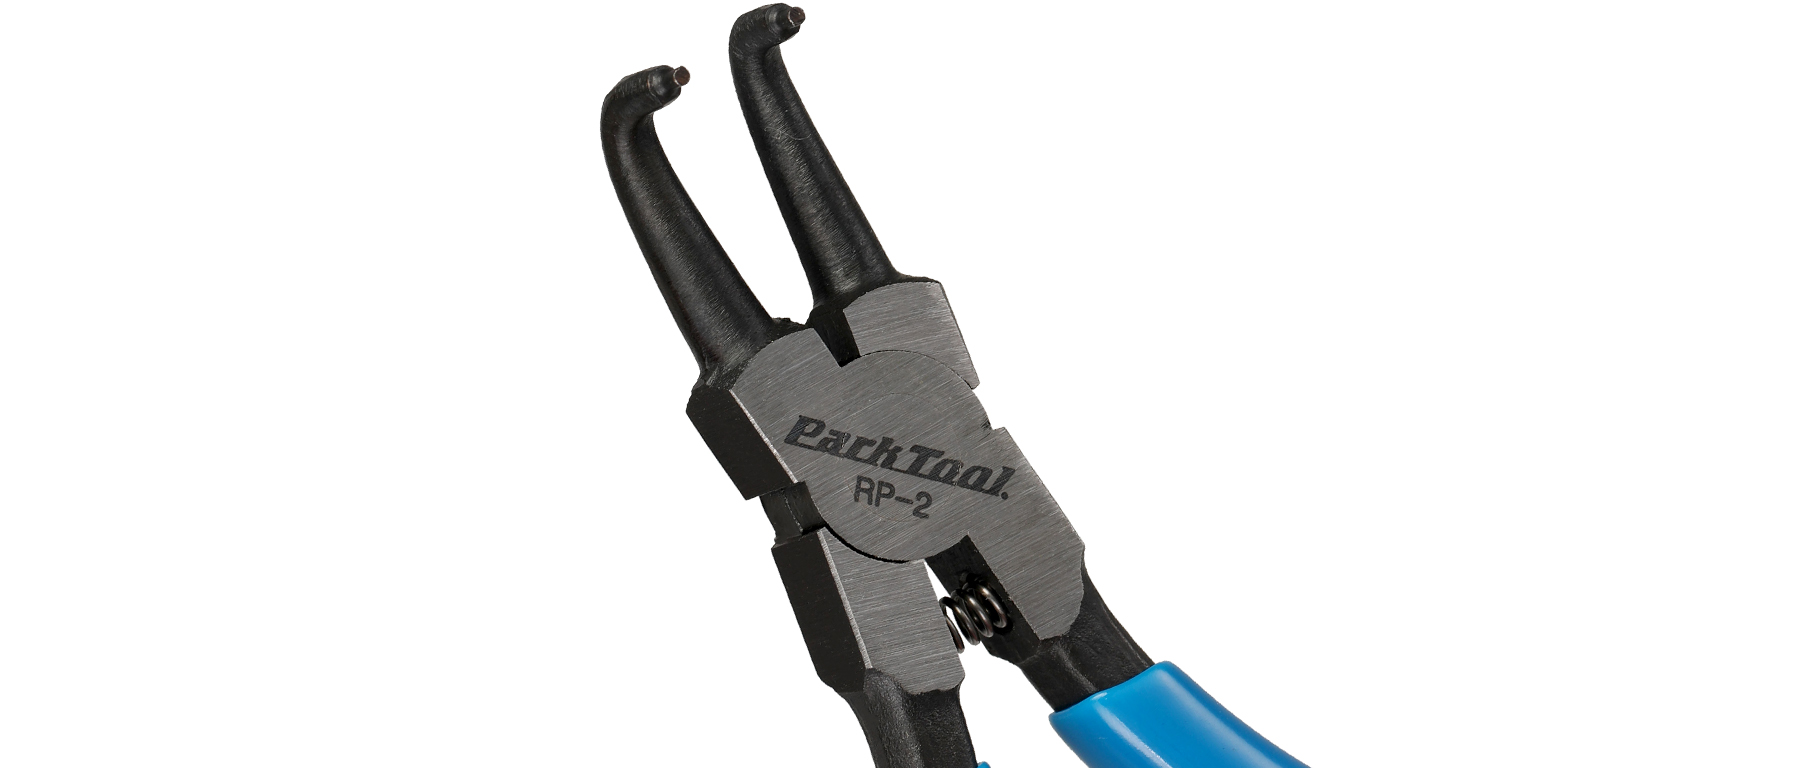 Park Tool RP-2 1.3mm Bent Internal Snap Ring Pliers